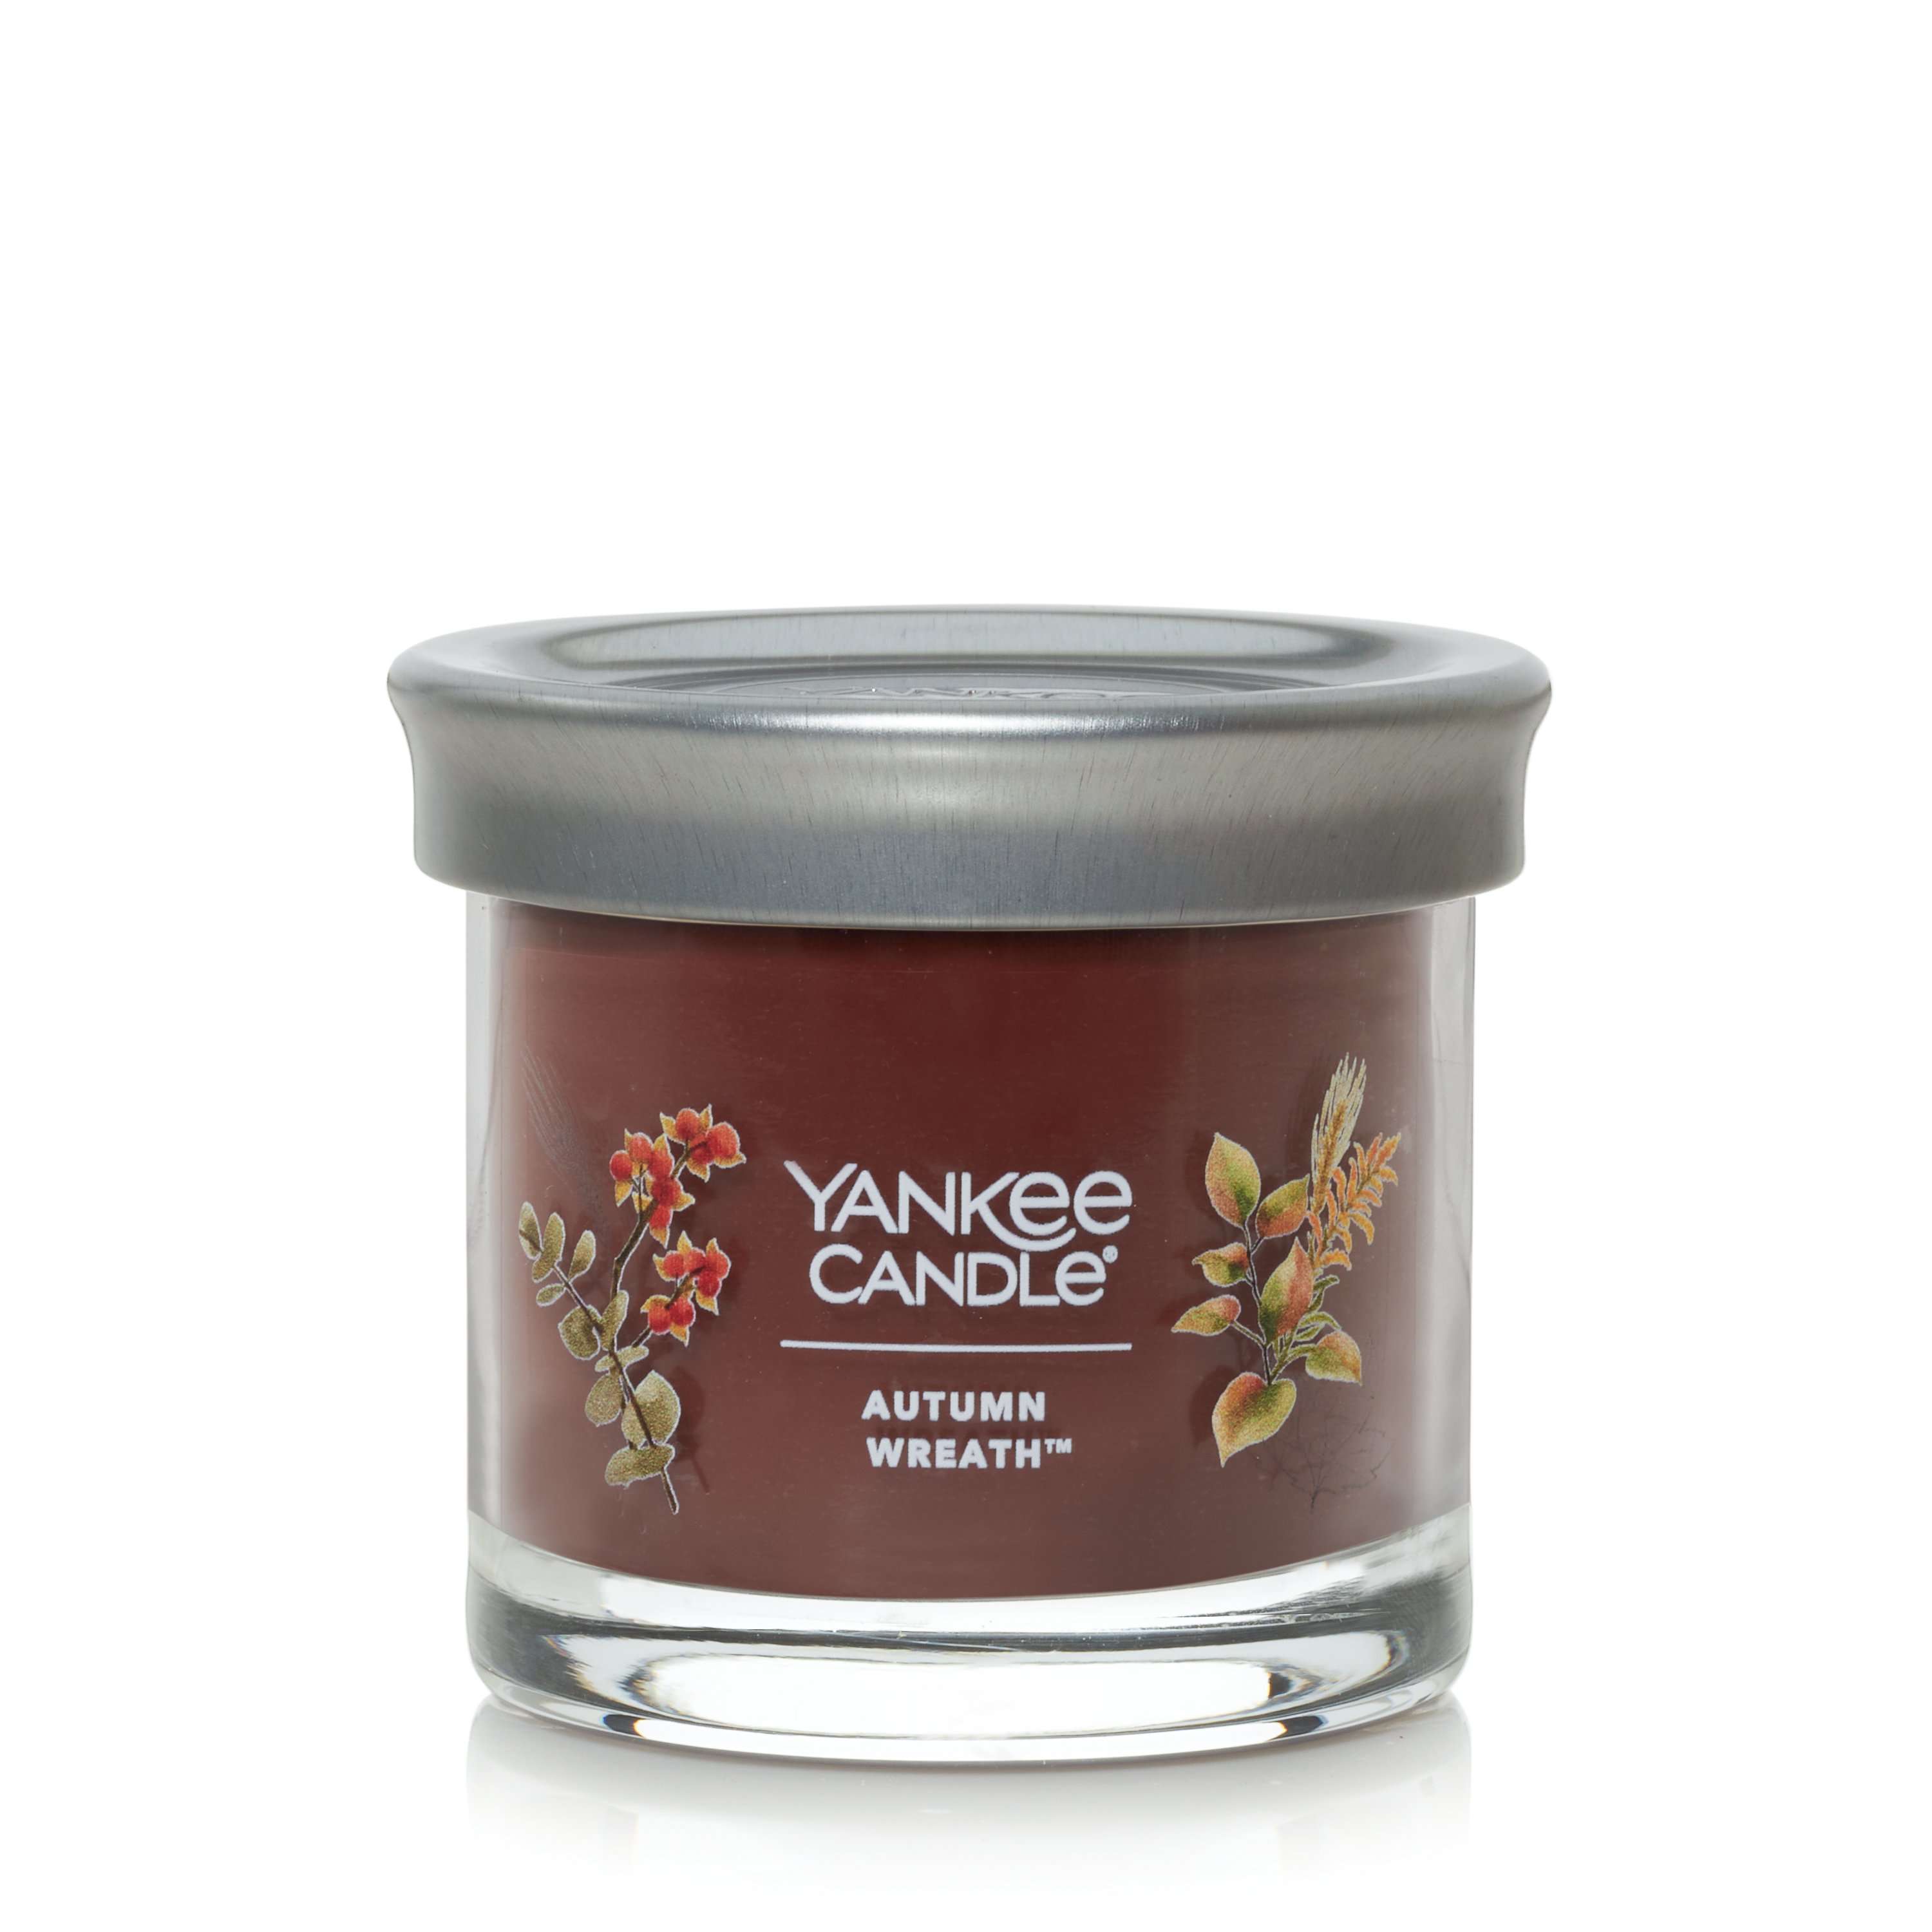 Yankee Candle Wax Melt 6 Pack - Autumn Wreath 